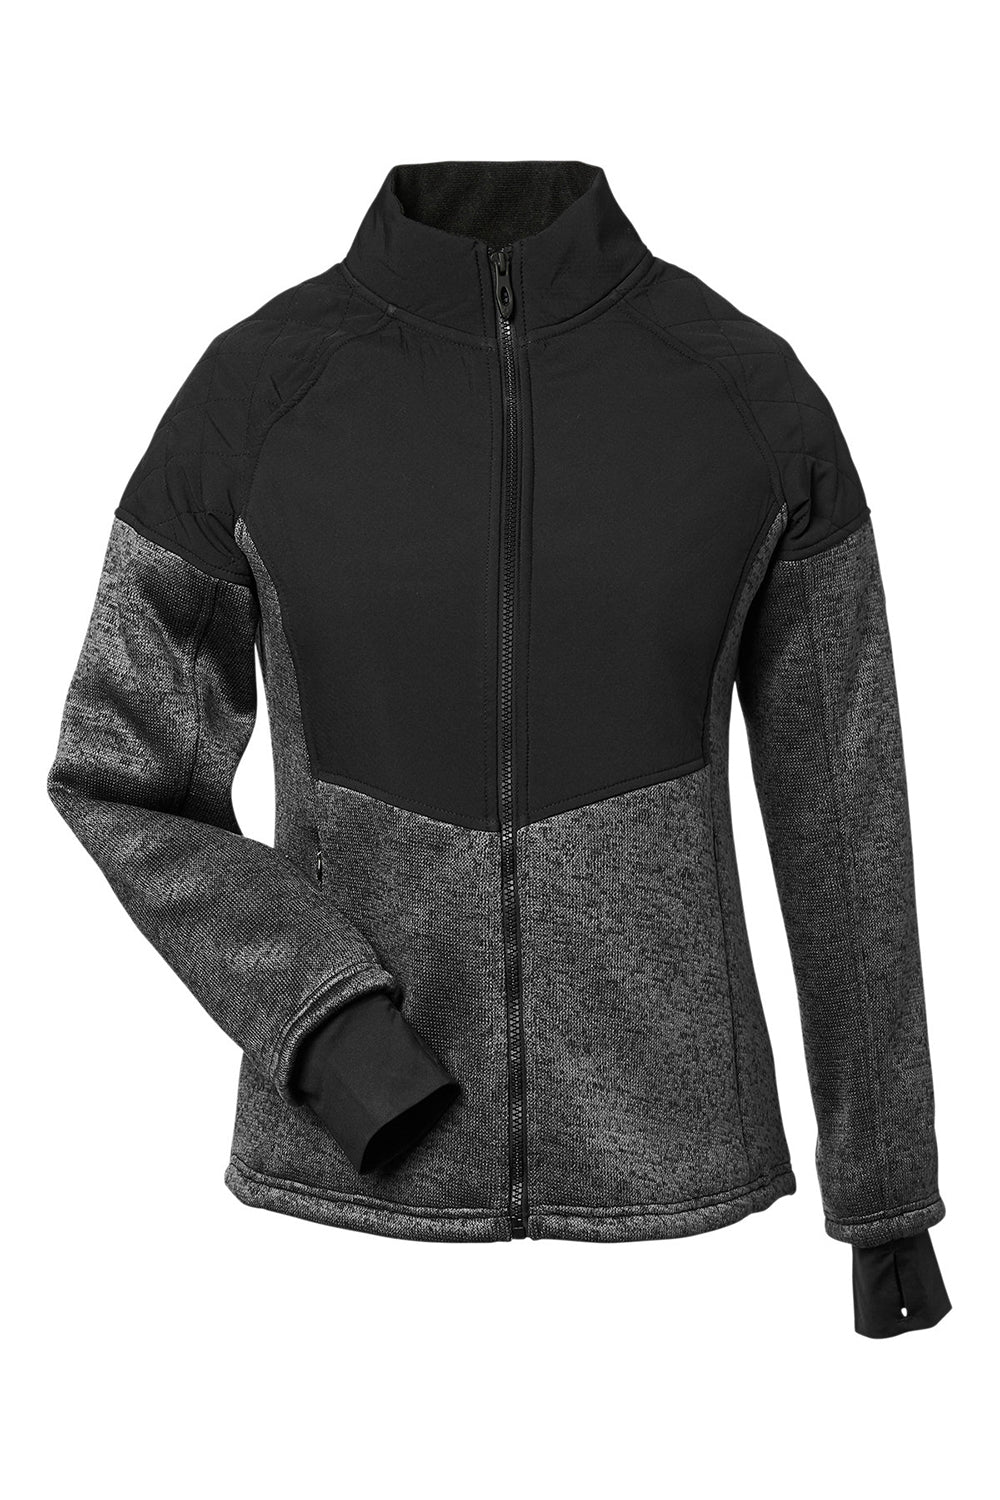 Spyder S17741 Womens Passage Full Zip Sweater Jacket Polar Grey Powder/Black Flat Front